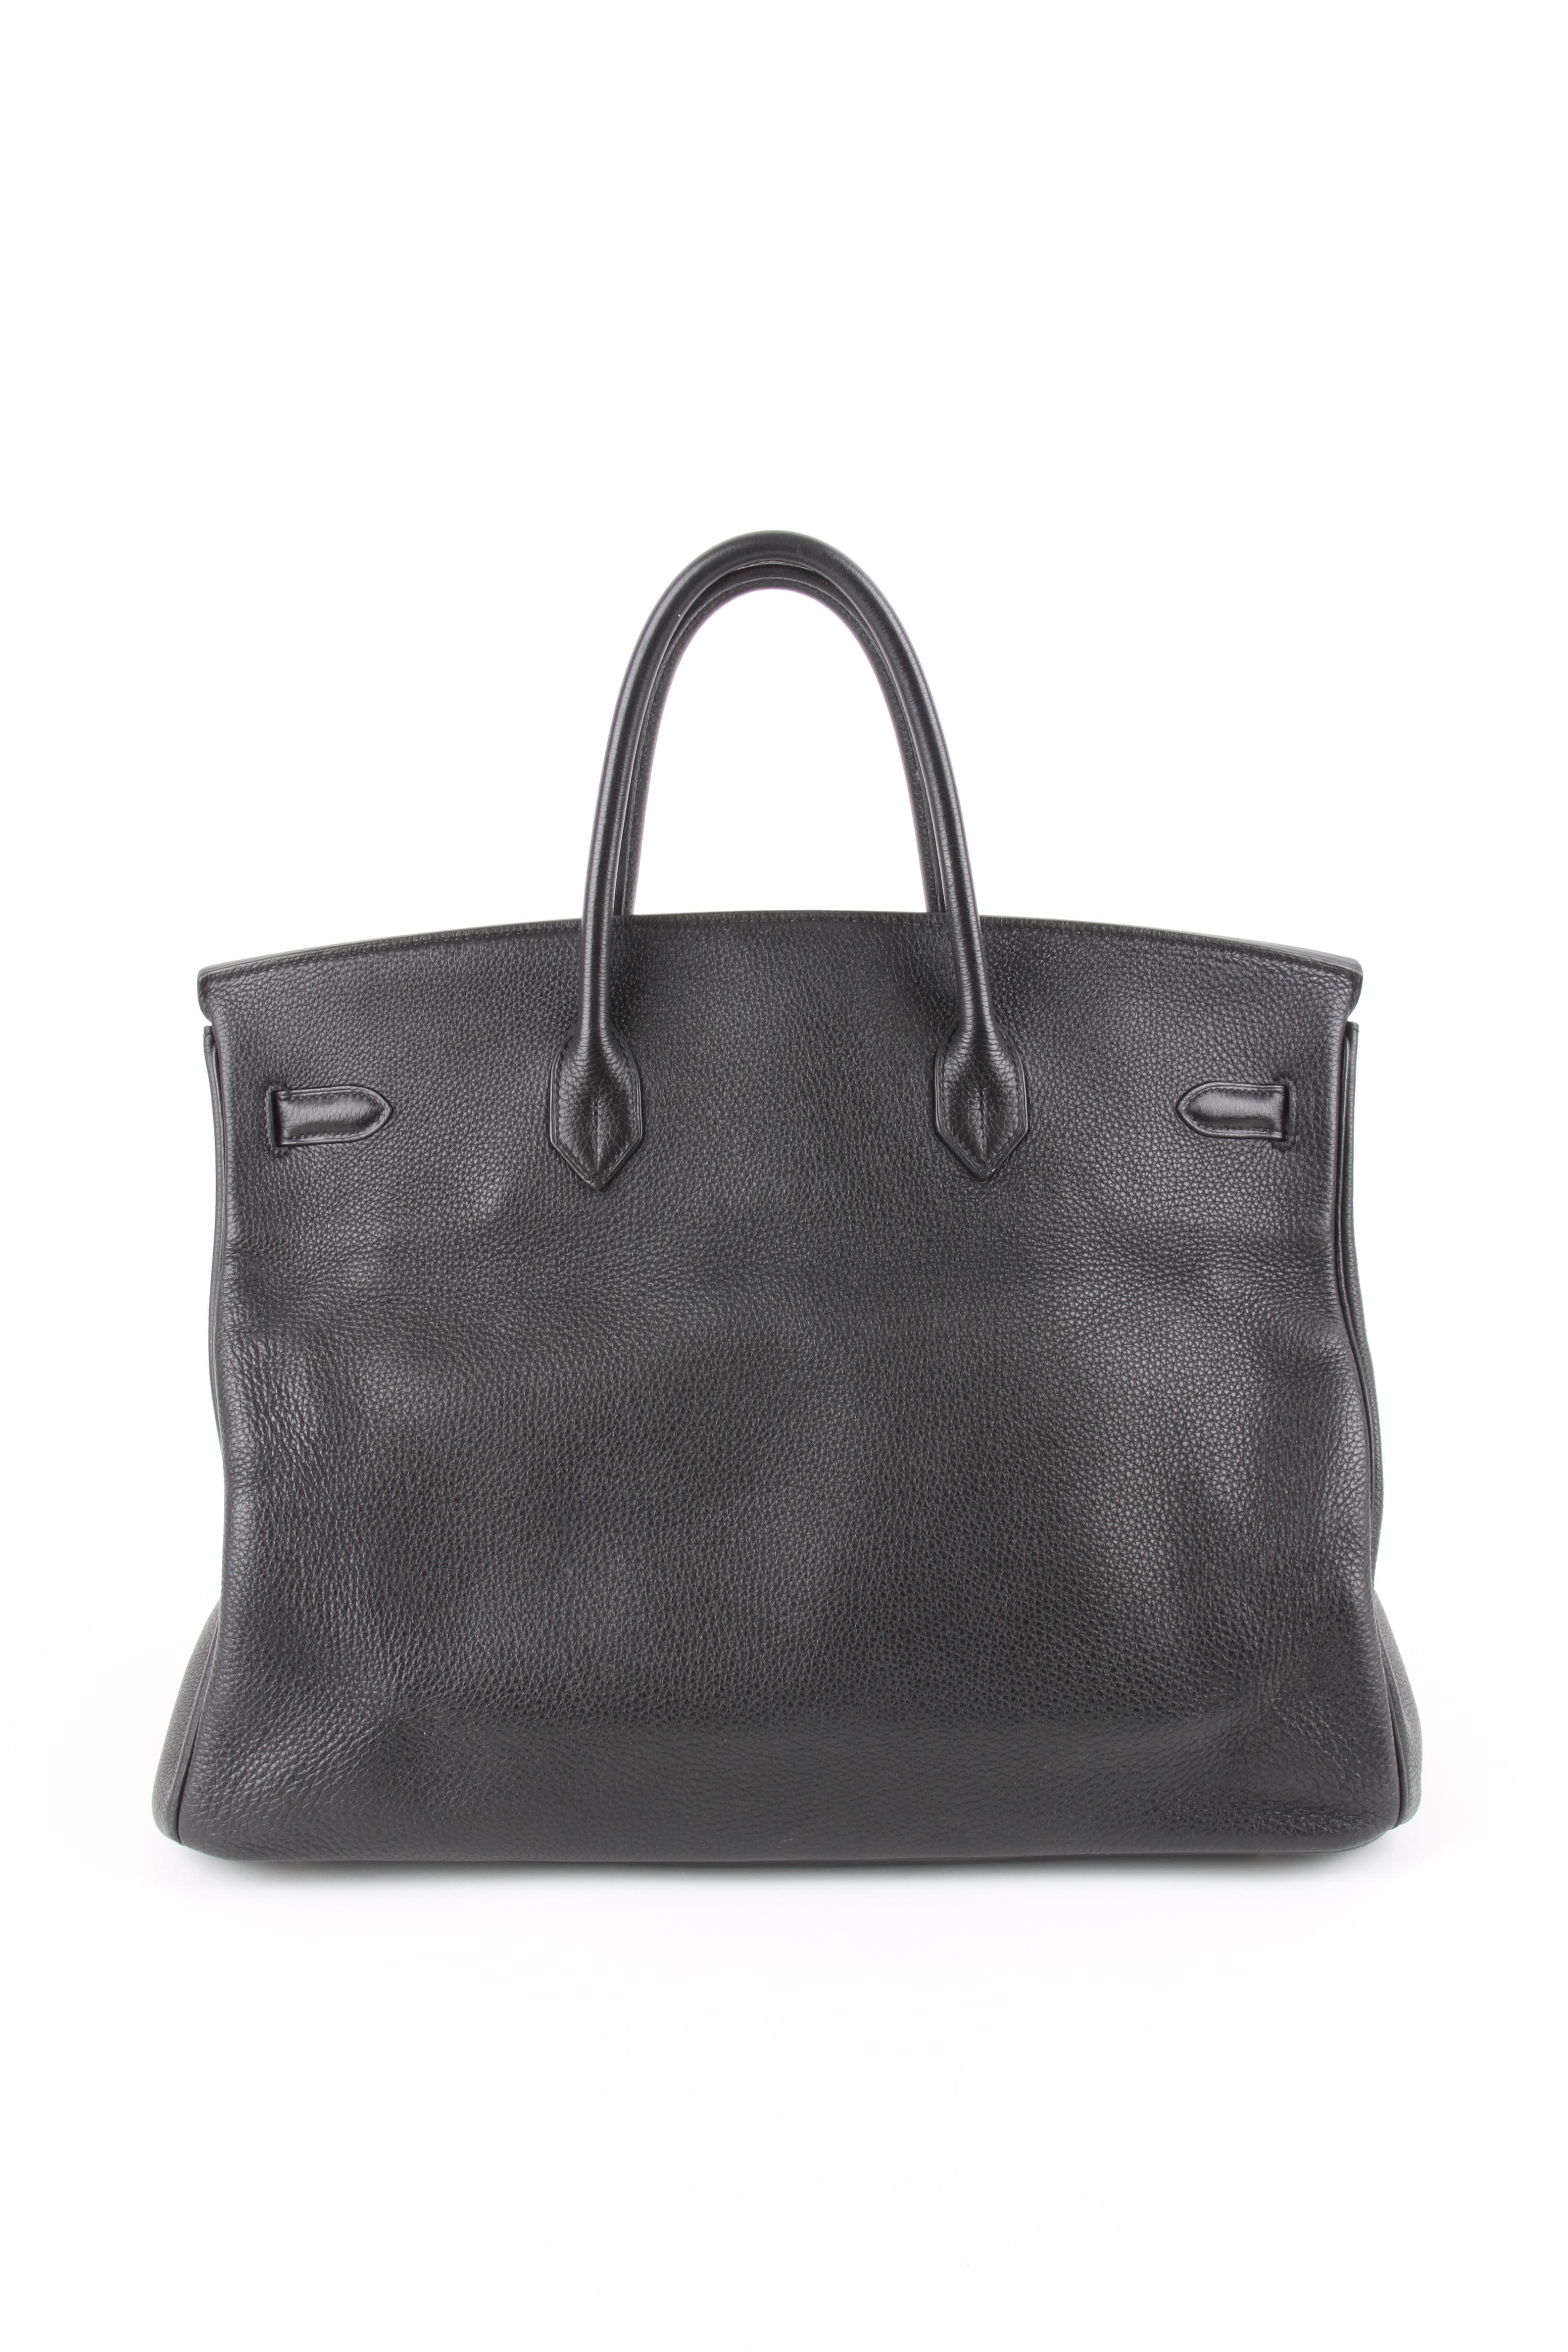 Hermes Birkin Bag 40 Togo - black In Good Condition For Sale In Baarn, NL